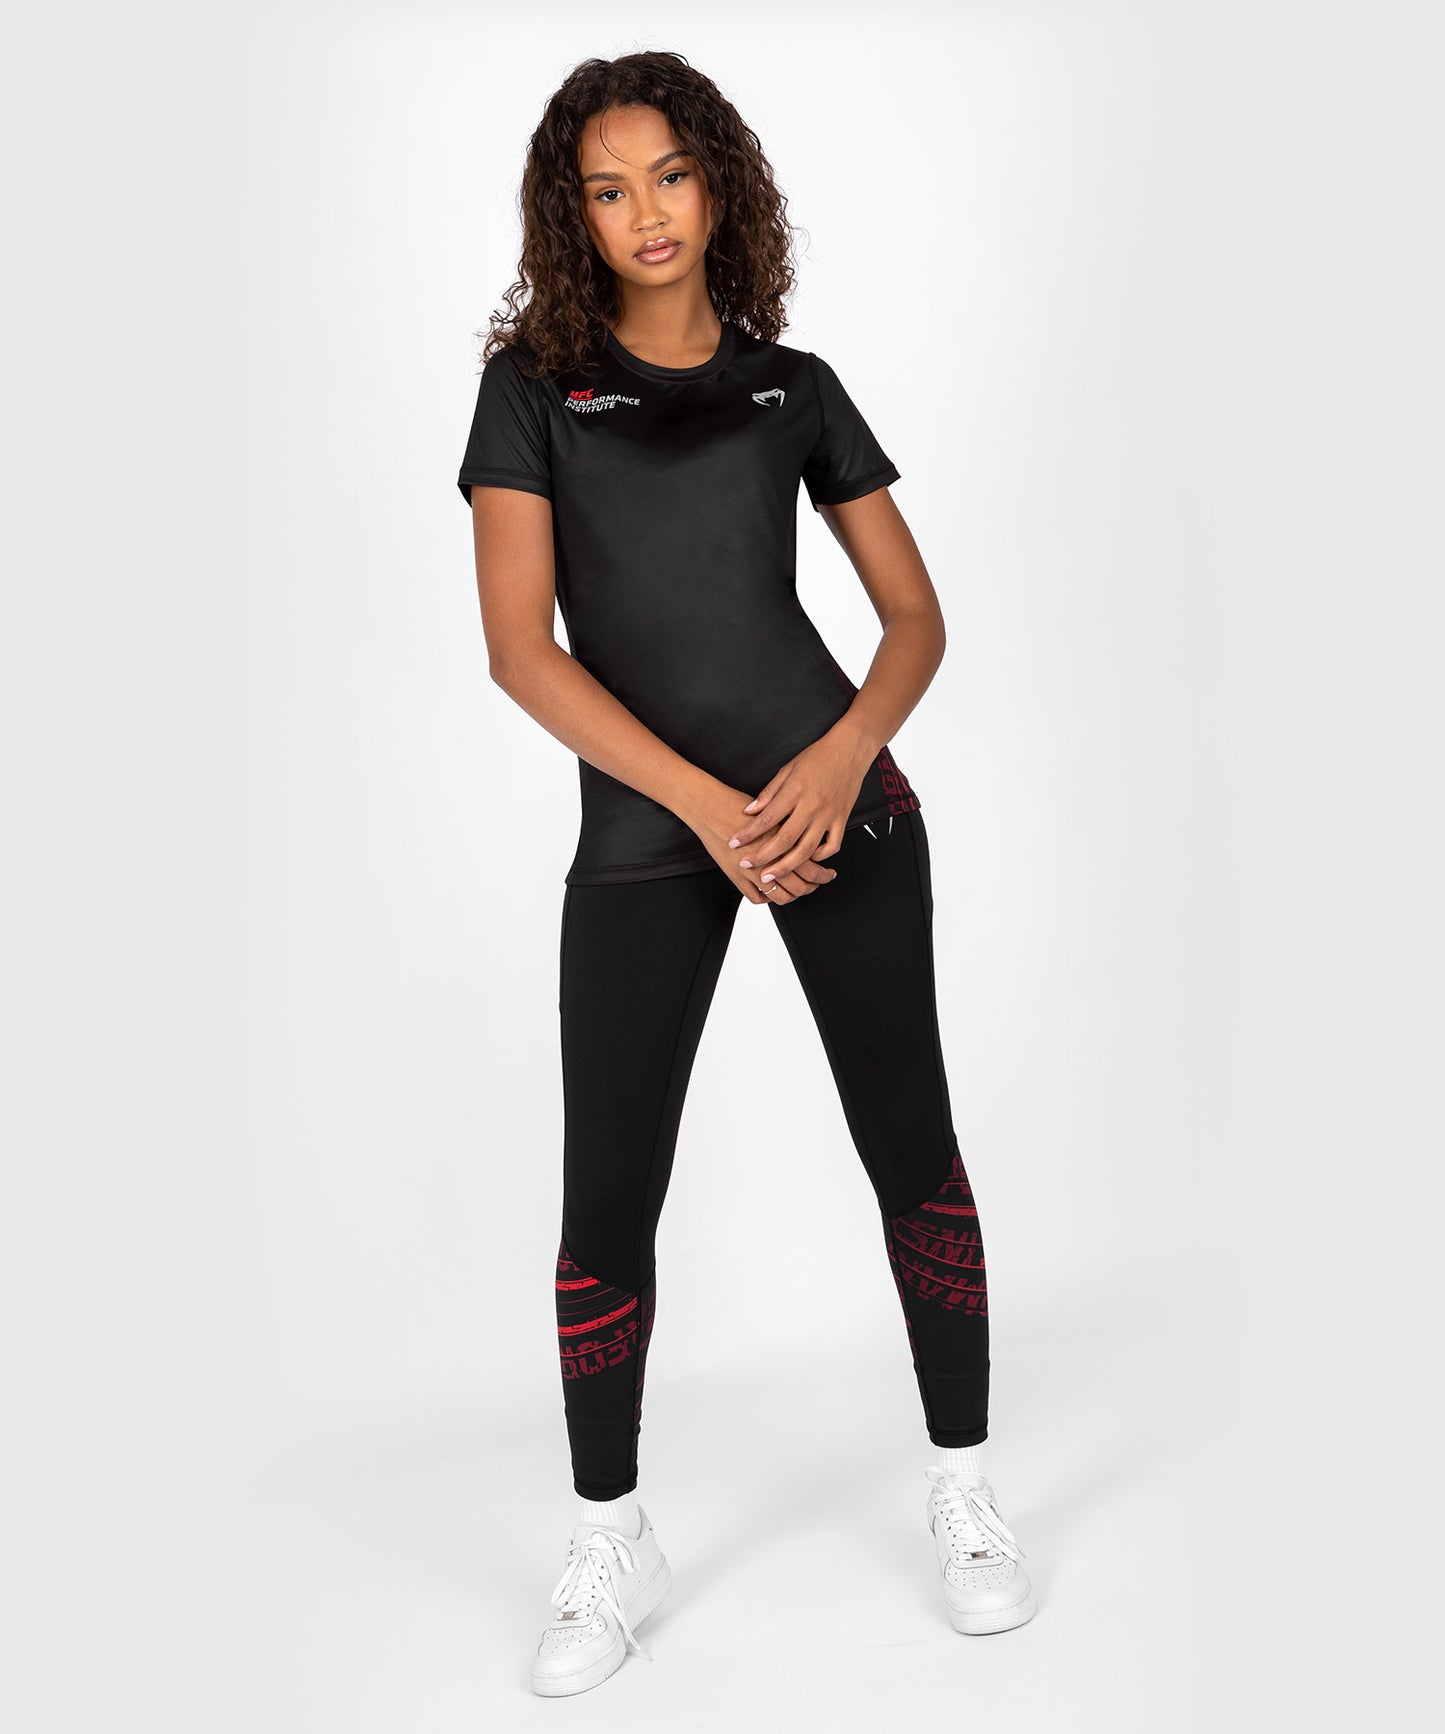 UFC Venum Performance Institute 2.0 Camiseta Dry-Tech para Mujer - Negra/Roja